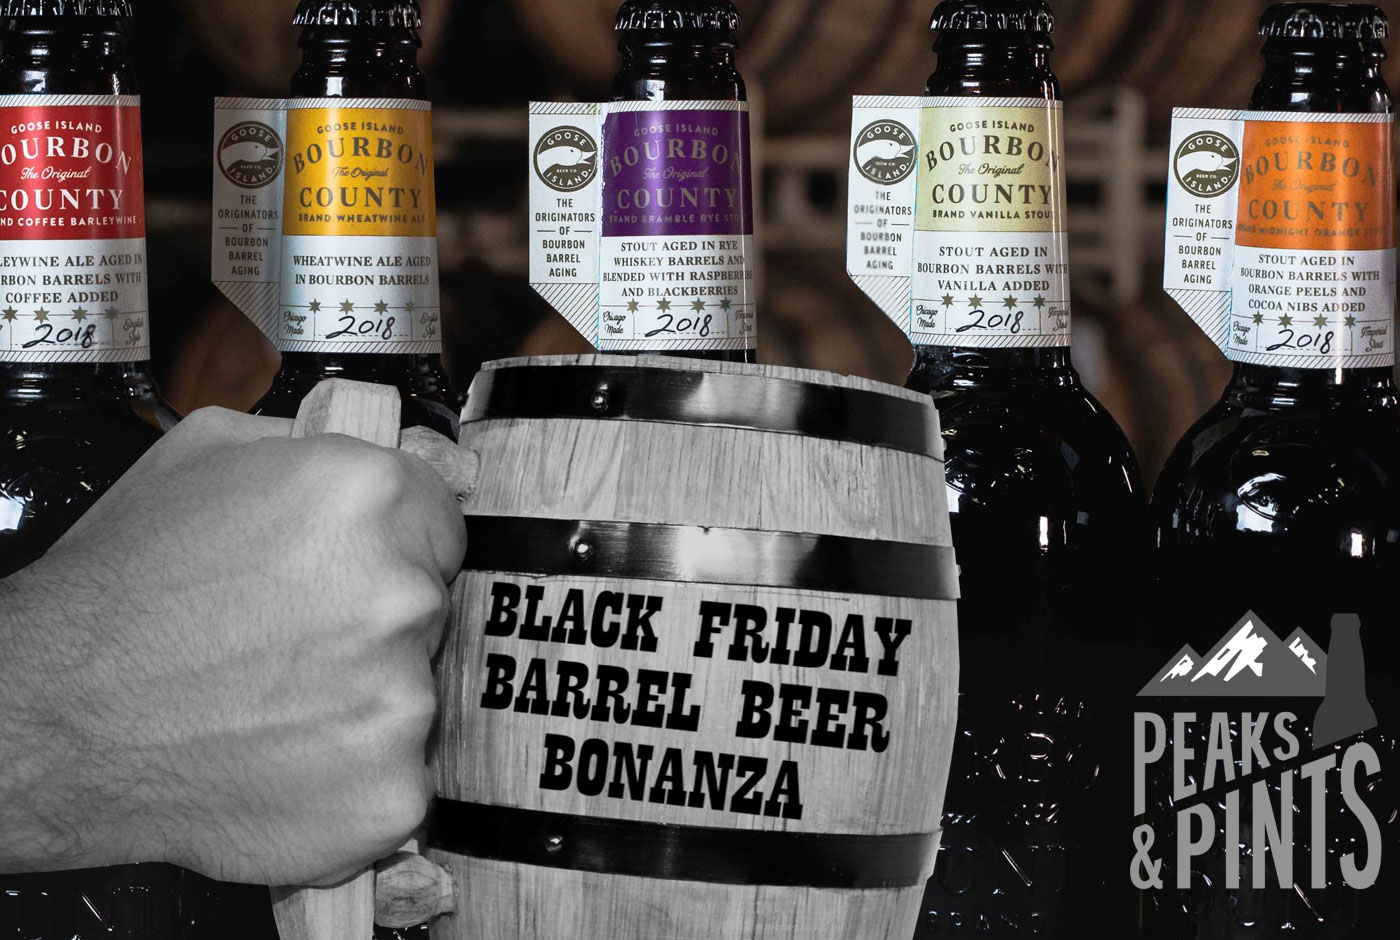 Peaks-and-Pints-Black-Friday-Barrel-Beer-Bonanza-Calendar